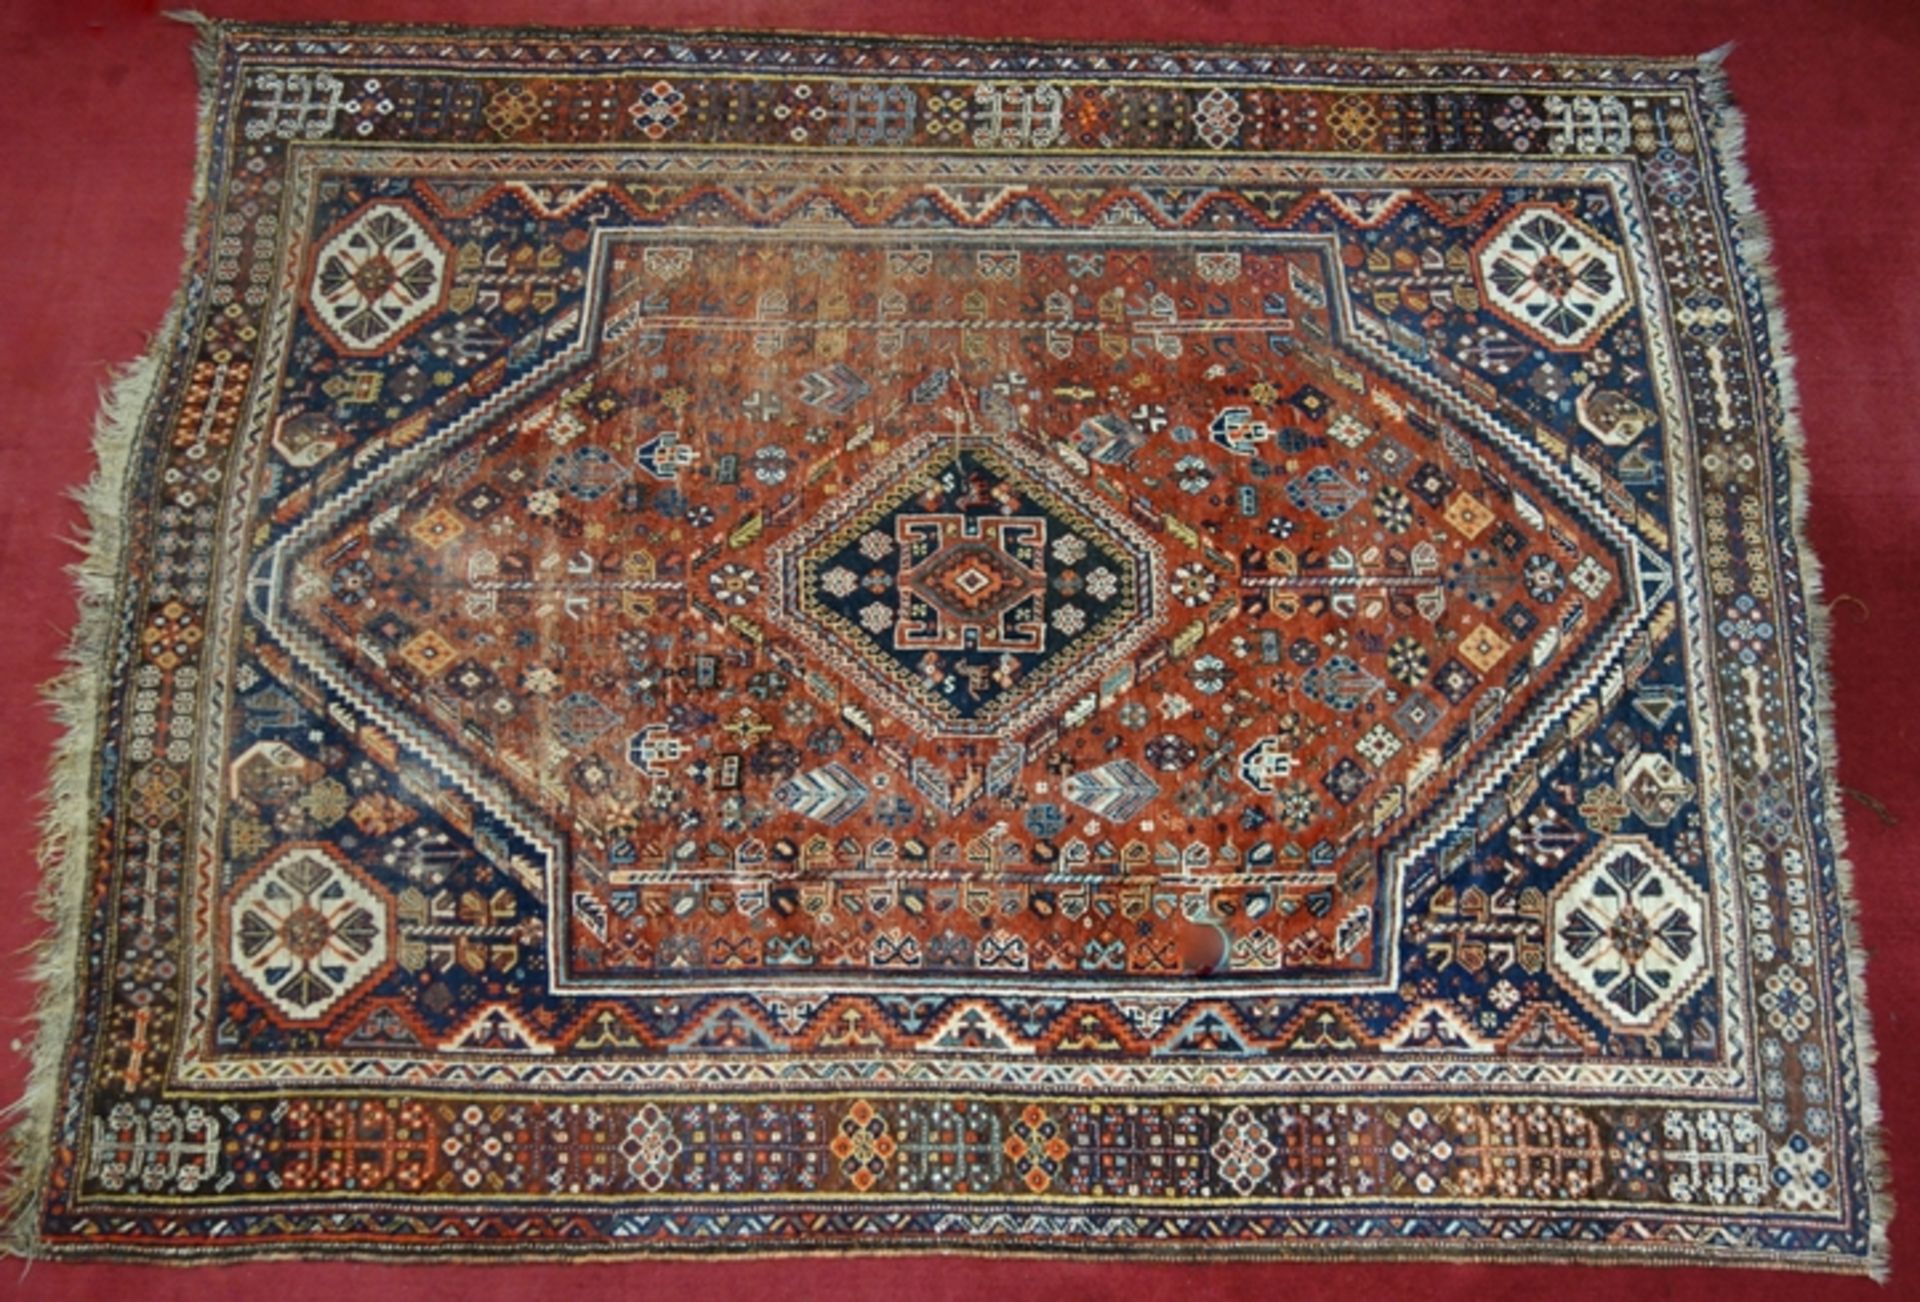 Teppich, Shiraz, 225*285cm, geometrische Muster, rot-braun gründig, starke Alte